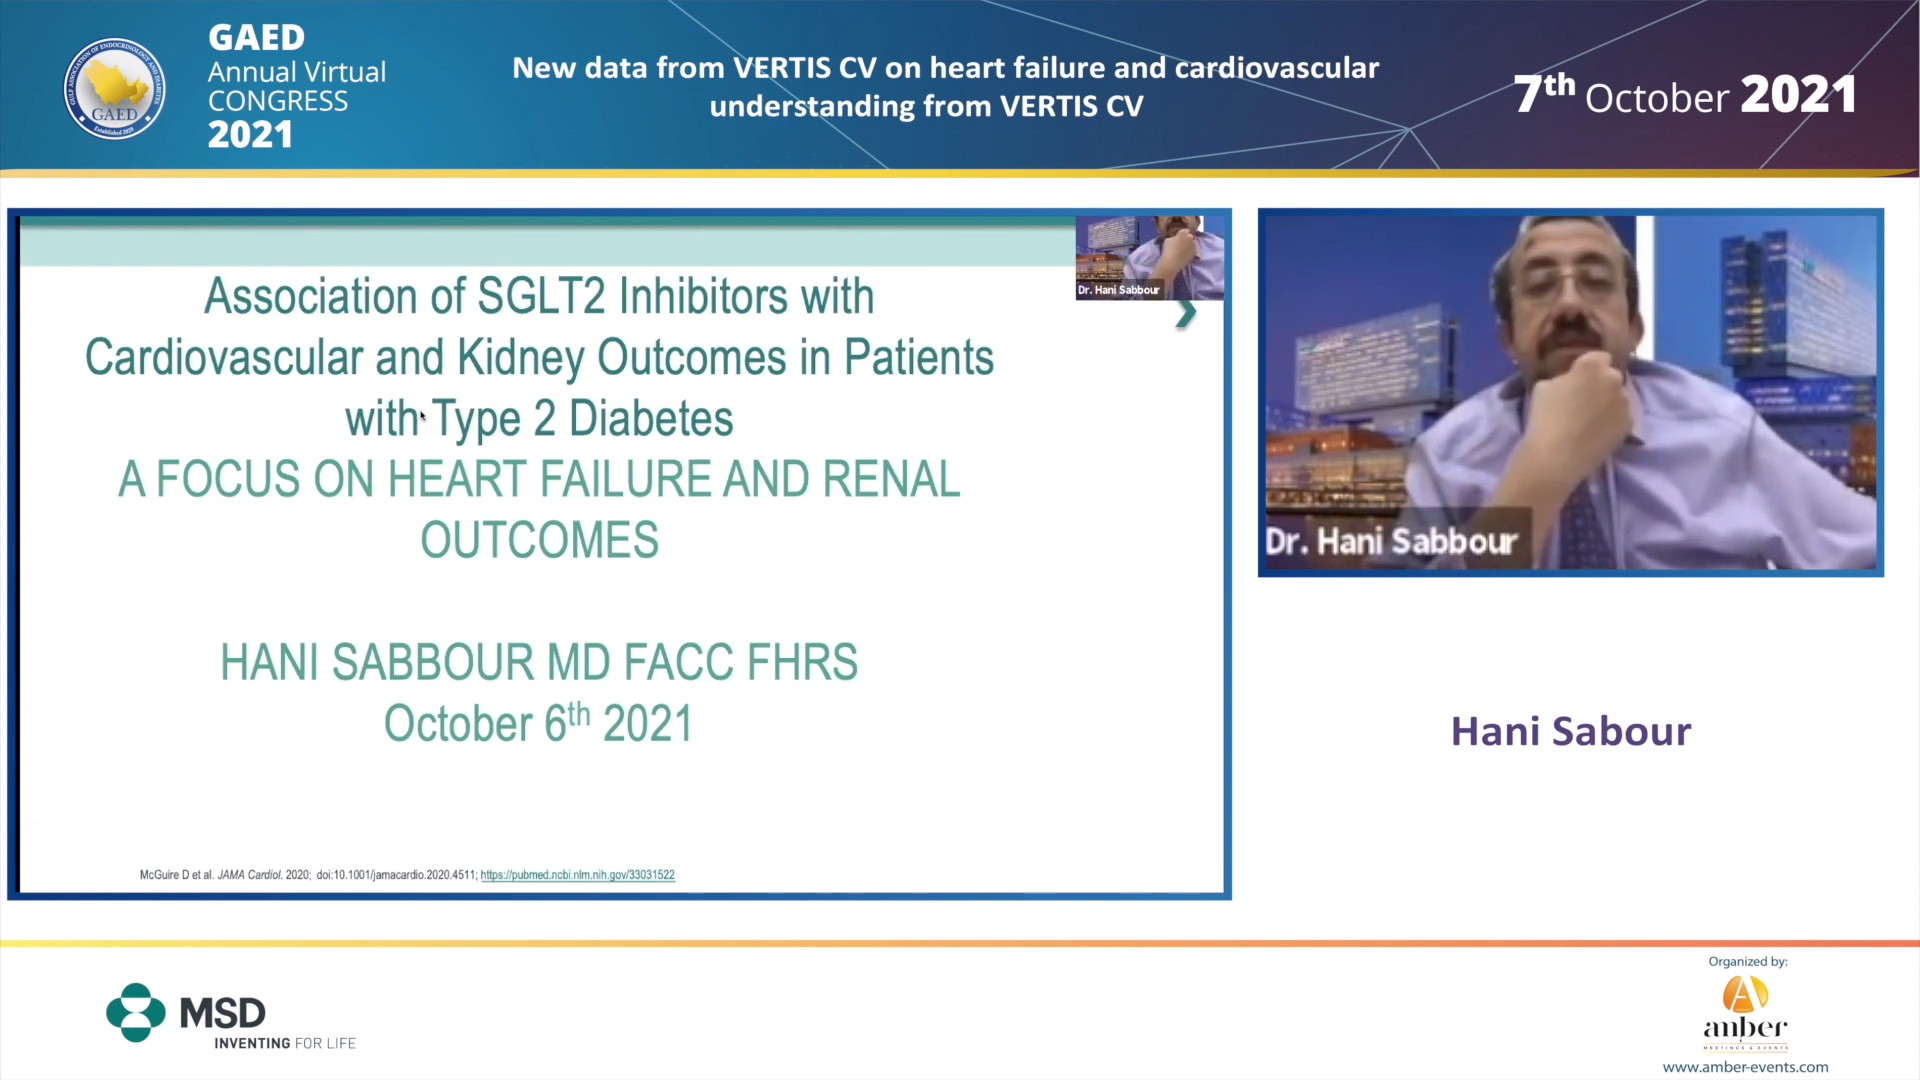 7.10.21 - Day 1, MSD - New data from VERTIS CV on heart failure and cardiovascular understanding